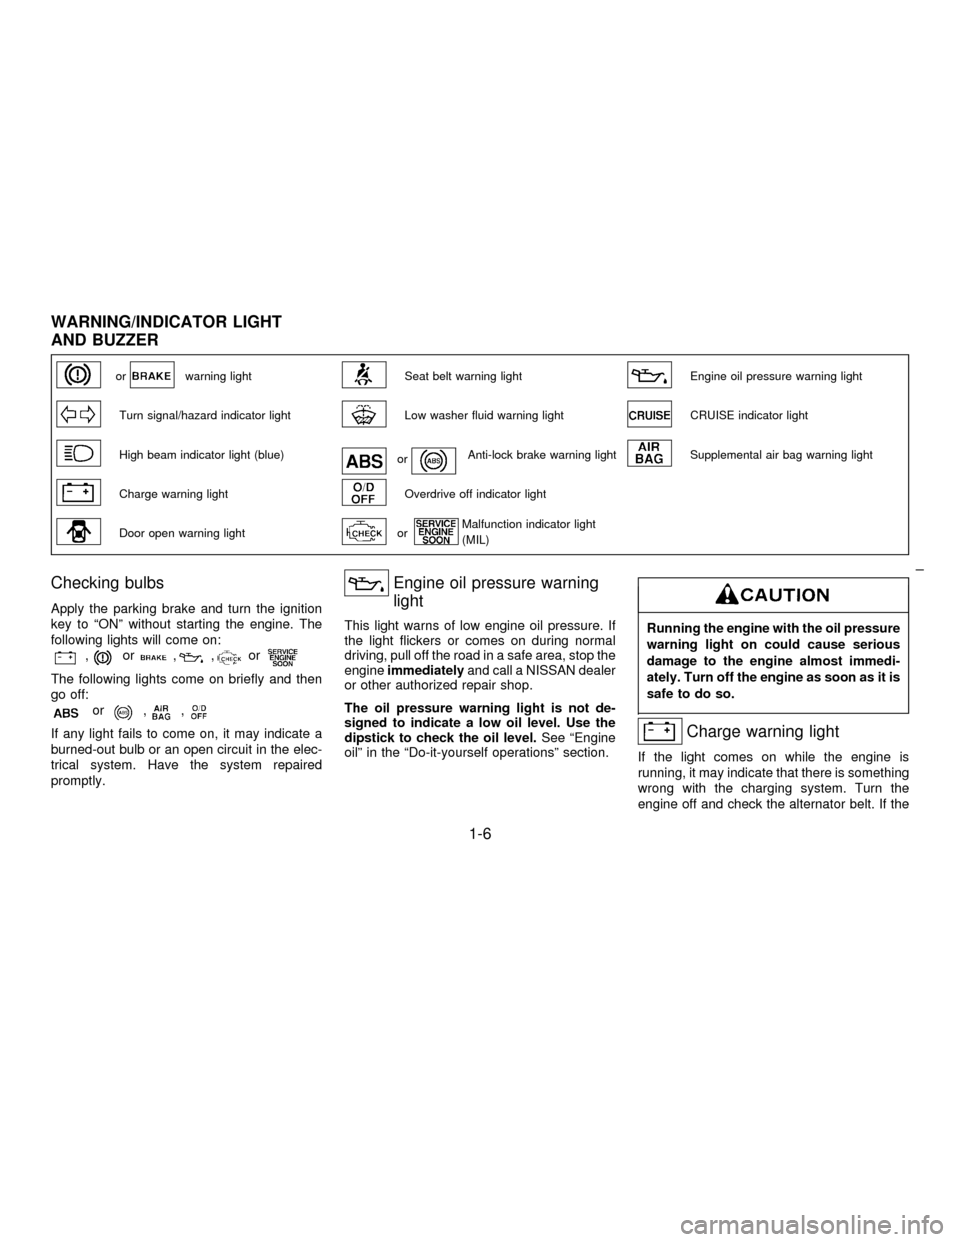 NISSAN MAXIMA 1997 A32 / 4.G Owners Manual orwarning lightSeat belt warning lightEngine oil pressure warning light
Turn signal/hazard indicator lightLow washer fluid warning lightCRUISE indicator light
High beam indicator light (blue)orAnti-lo